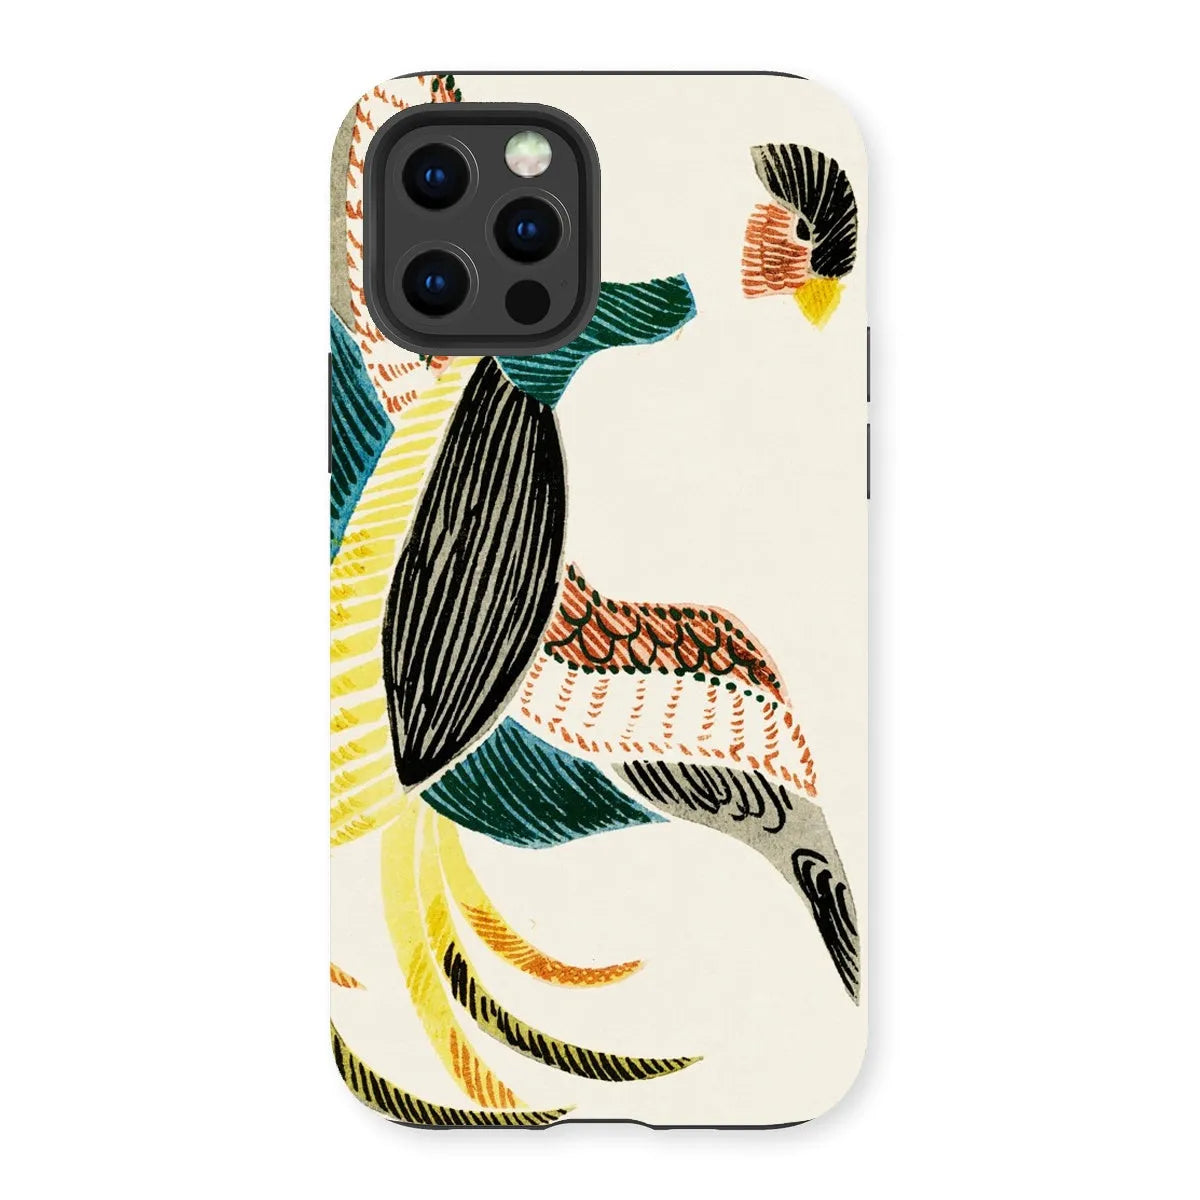 Woodblock Crane - Japanese Bird Phone Case - Taguchi Tomoki - Iphone 13 Pro / Matte - Mobile Phone Cases - Aesthetic Art